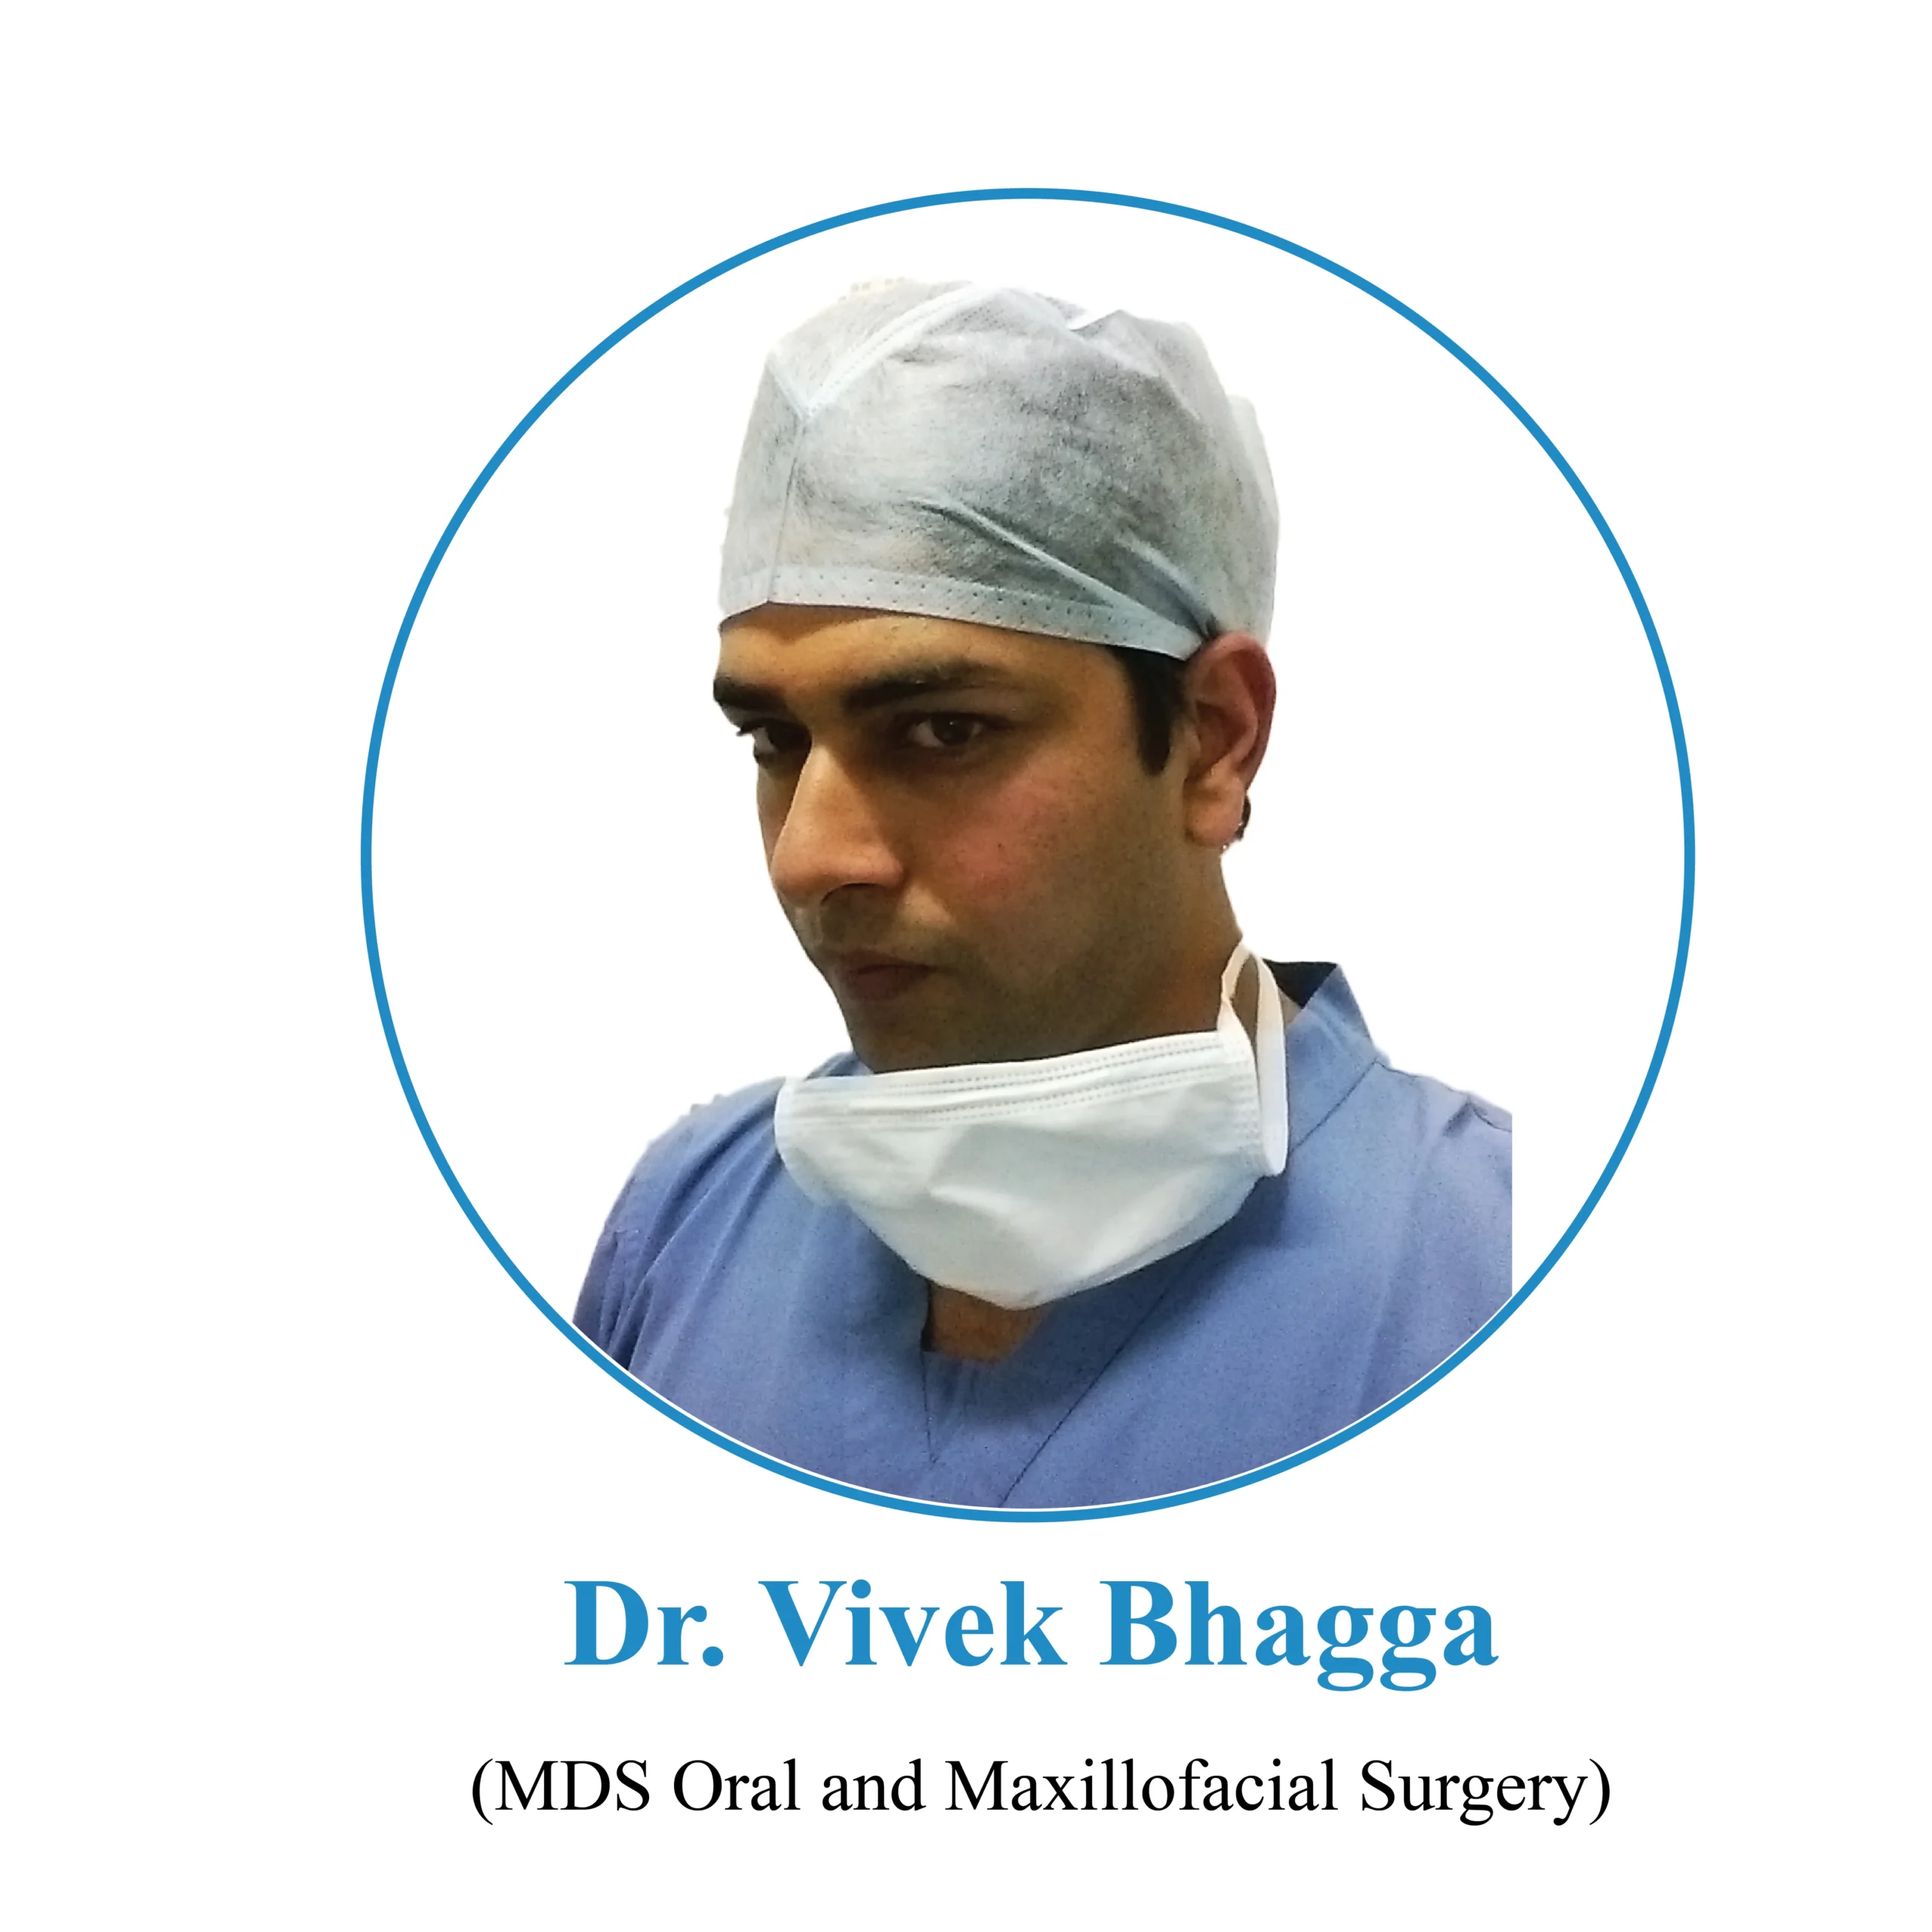 Dr. Vivek Bhagga – House of Smiles